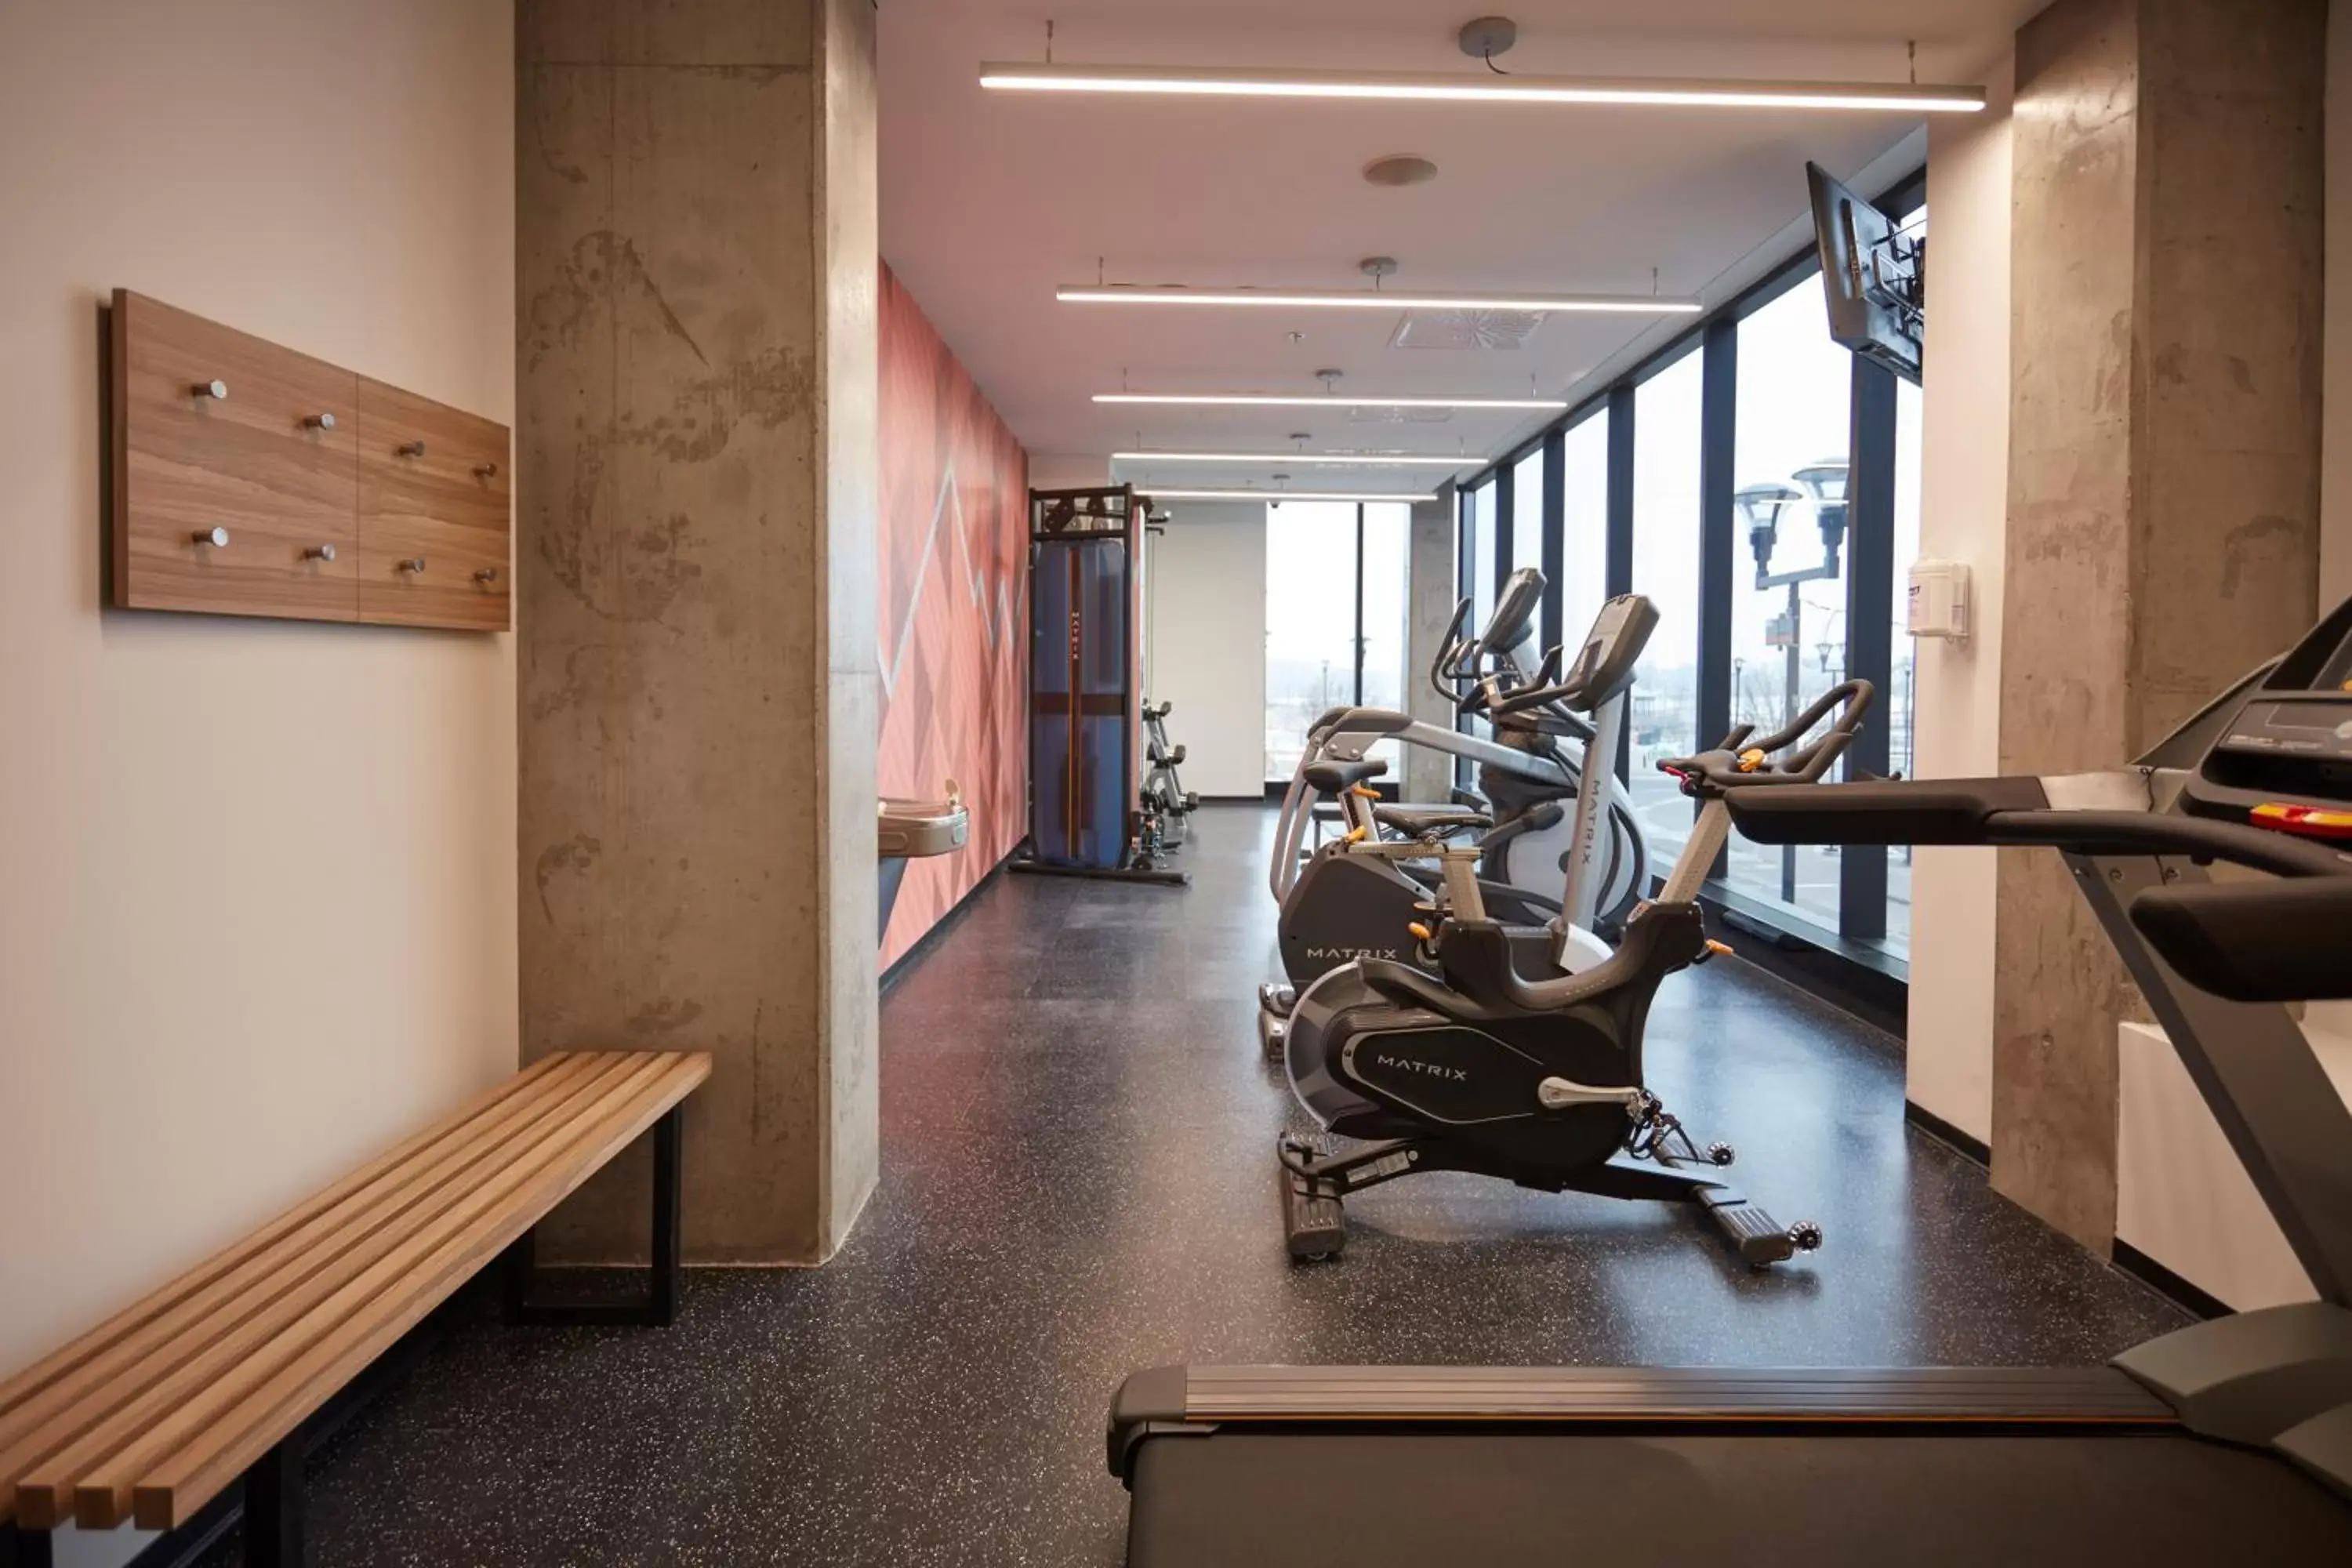 Fitness centre/facilities, Fitness Center/Facilities in Alt Hotel Calgary East Village